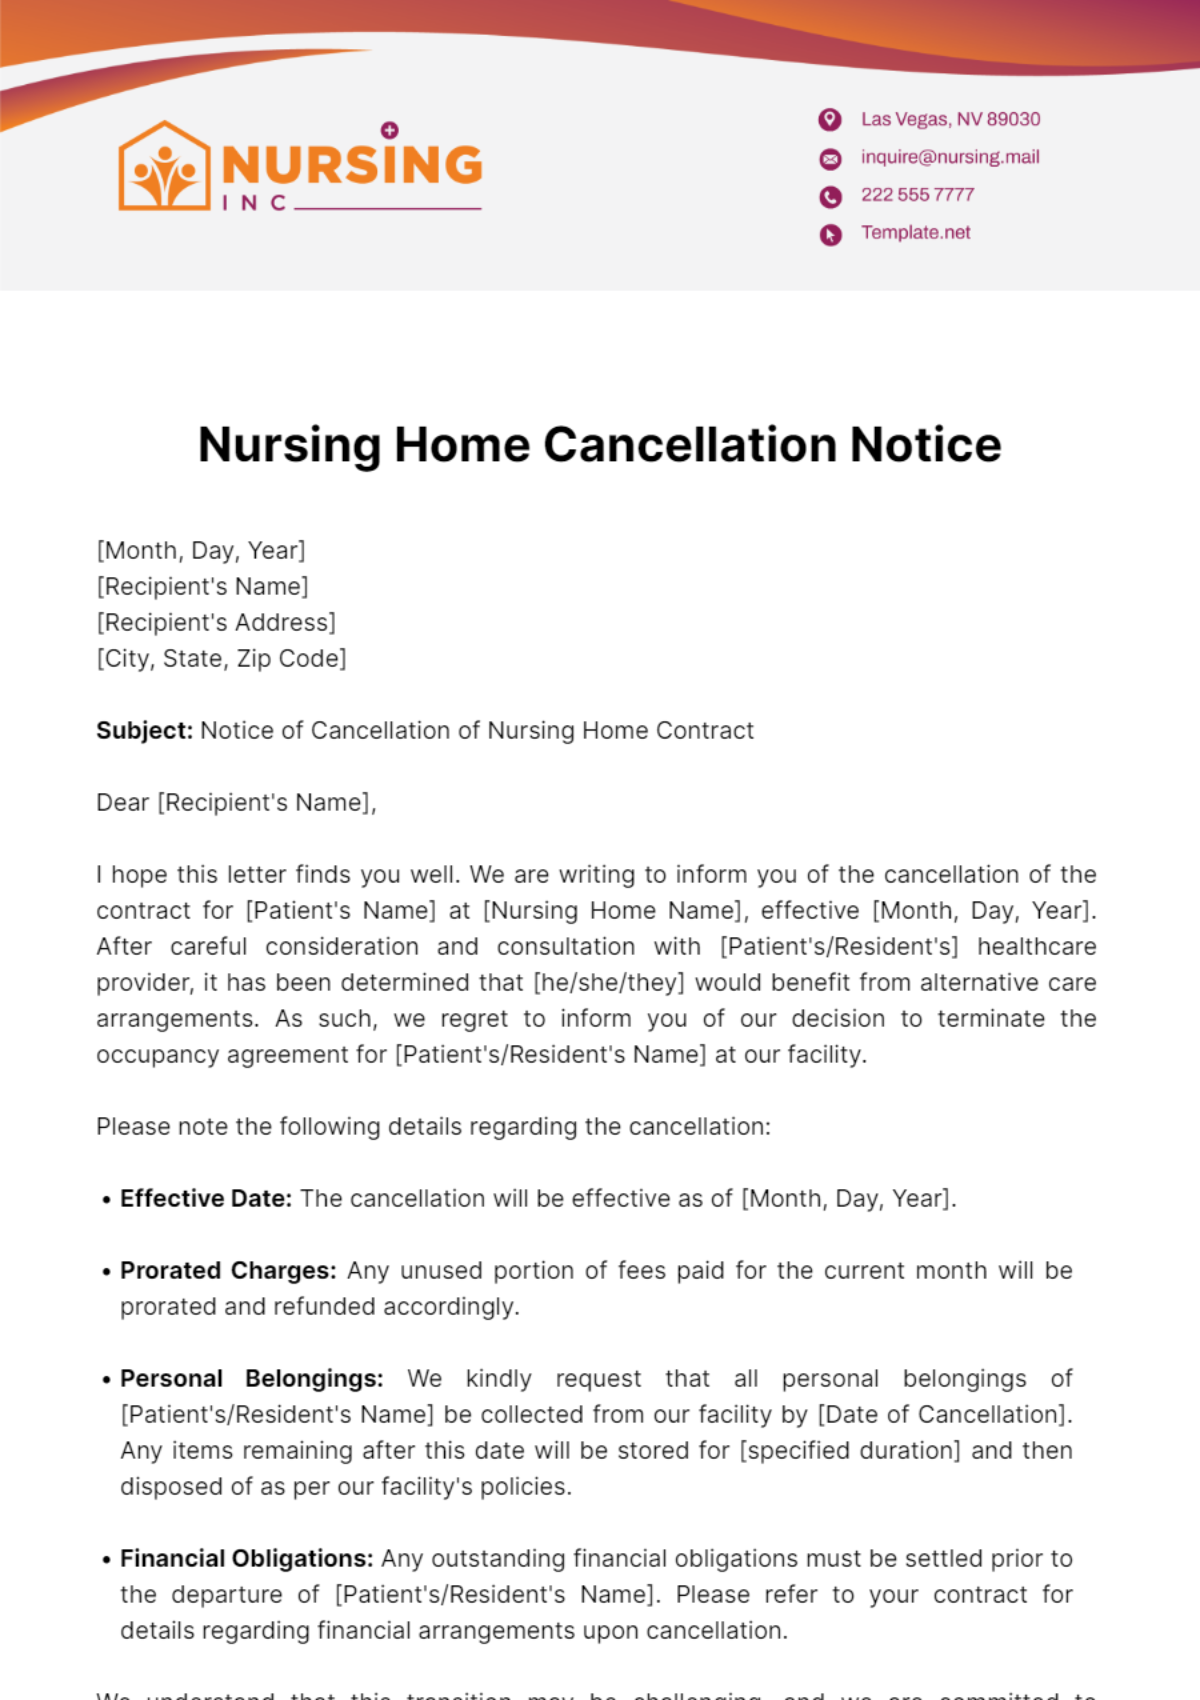 Nursing Home Cancellation Notice Template